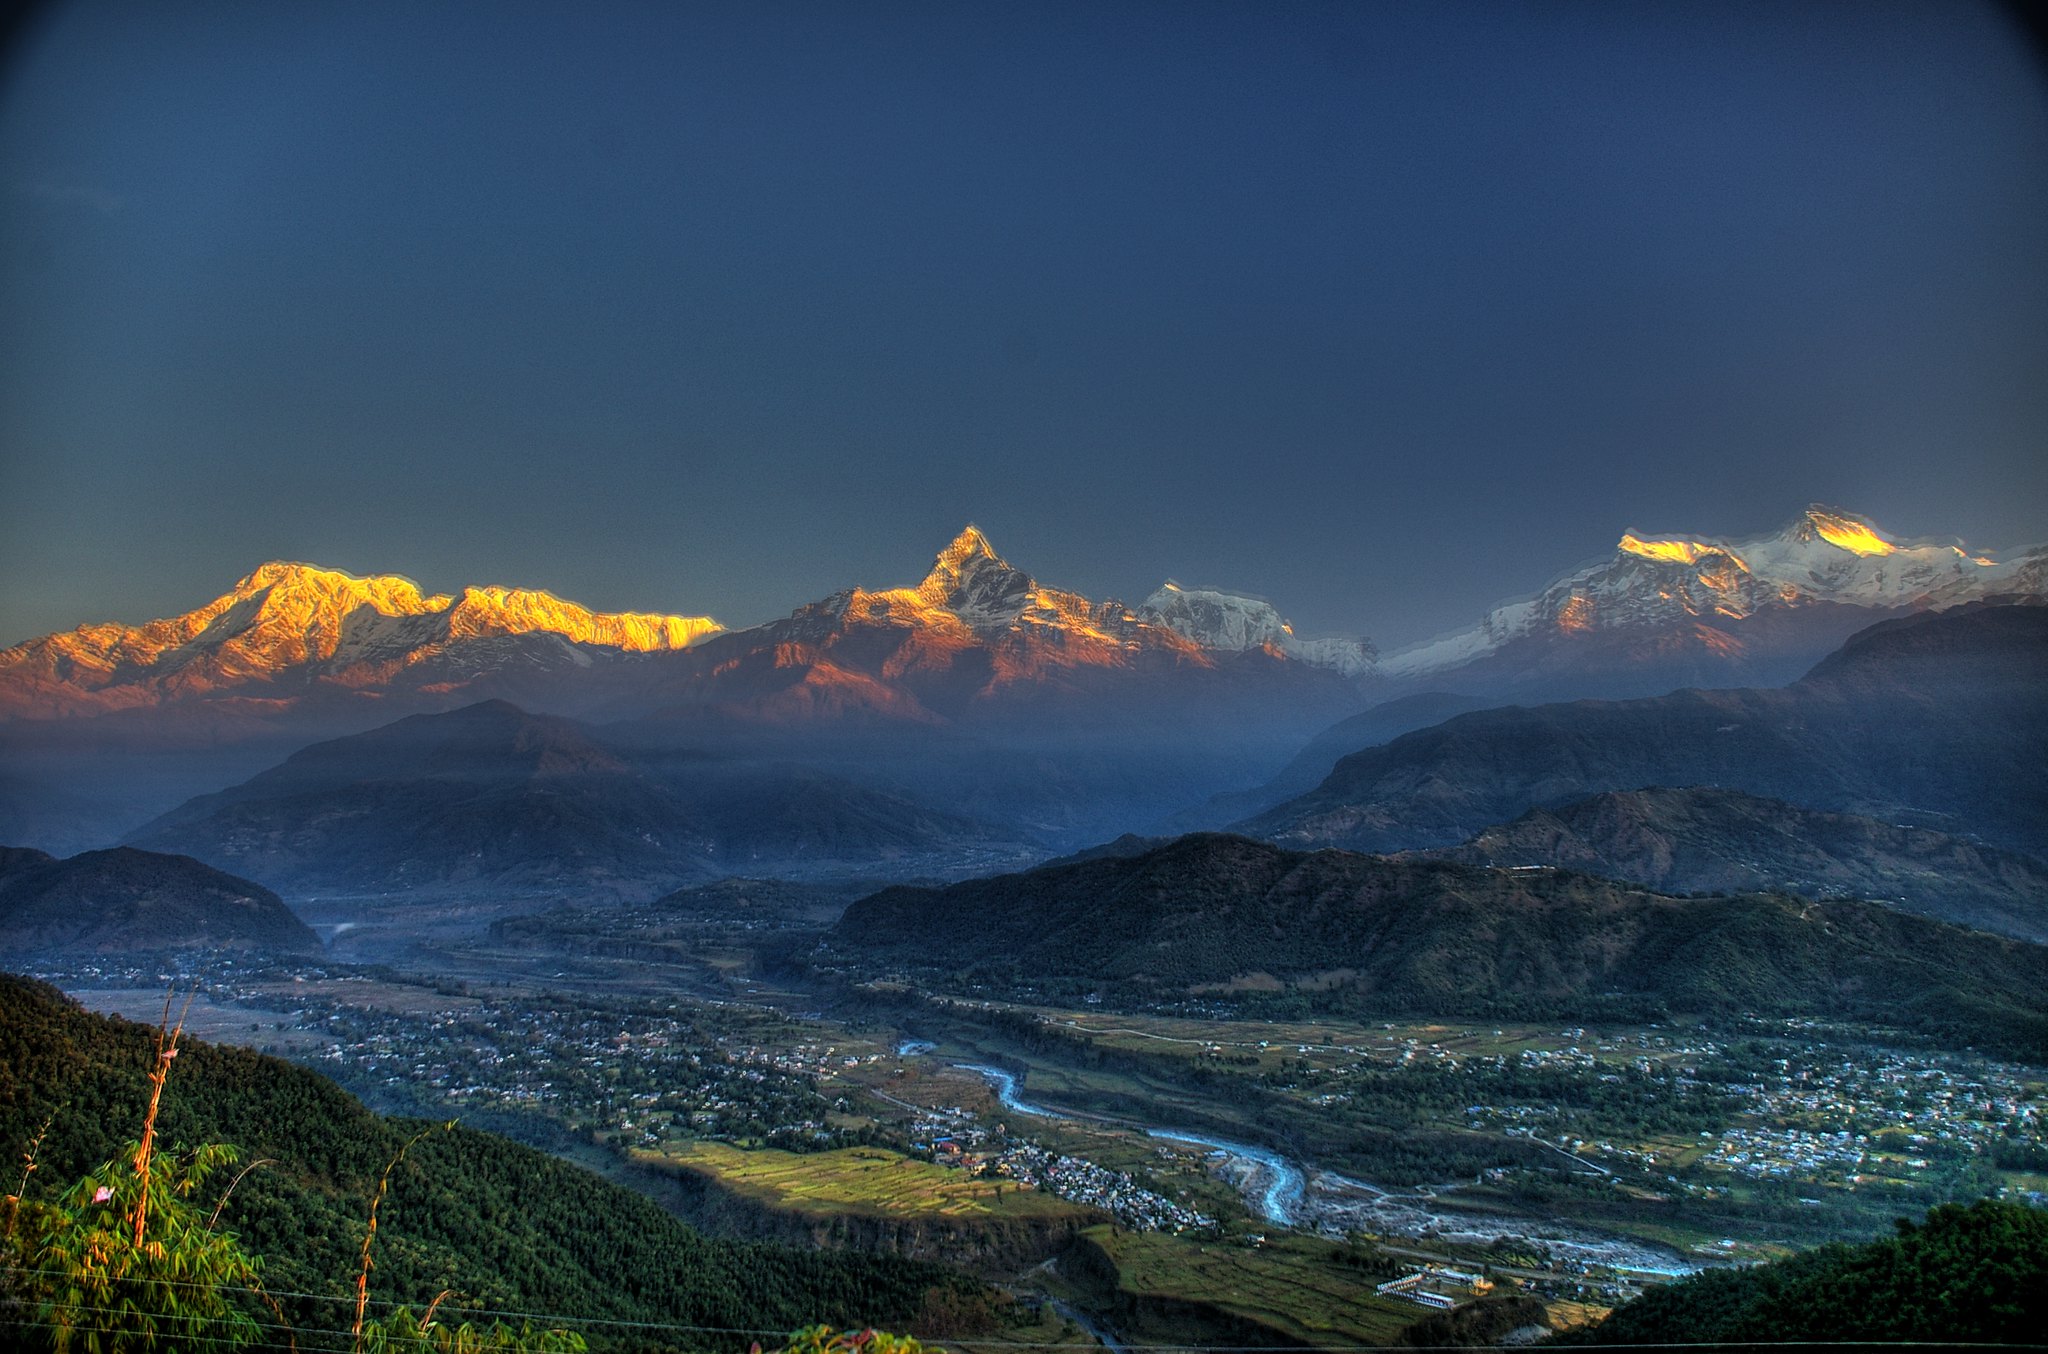 tourism in pokhara essay